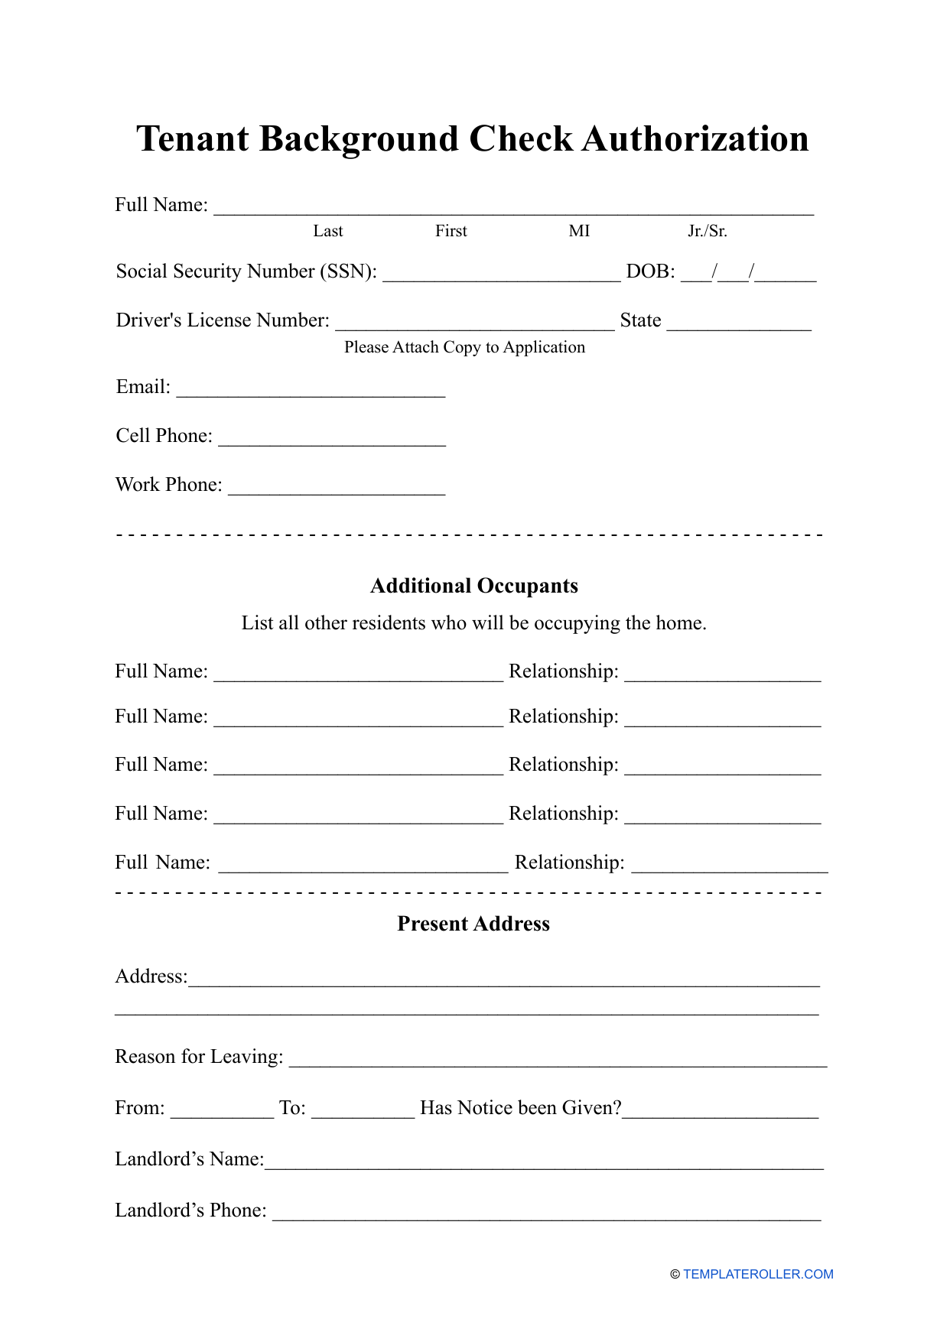 Tenant Background Check Form Download Printable PDF